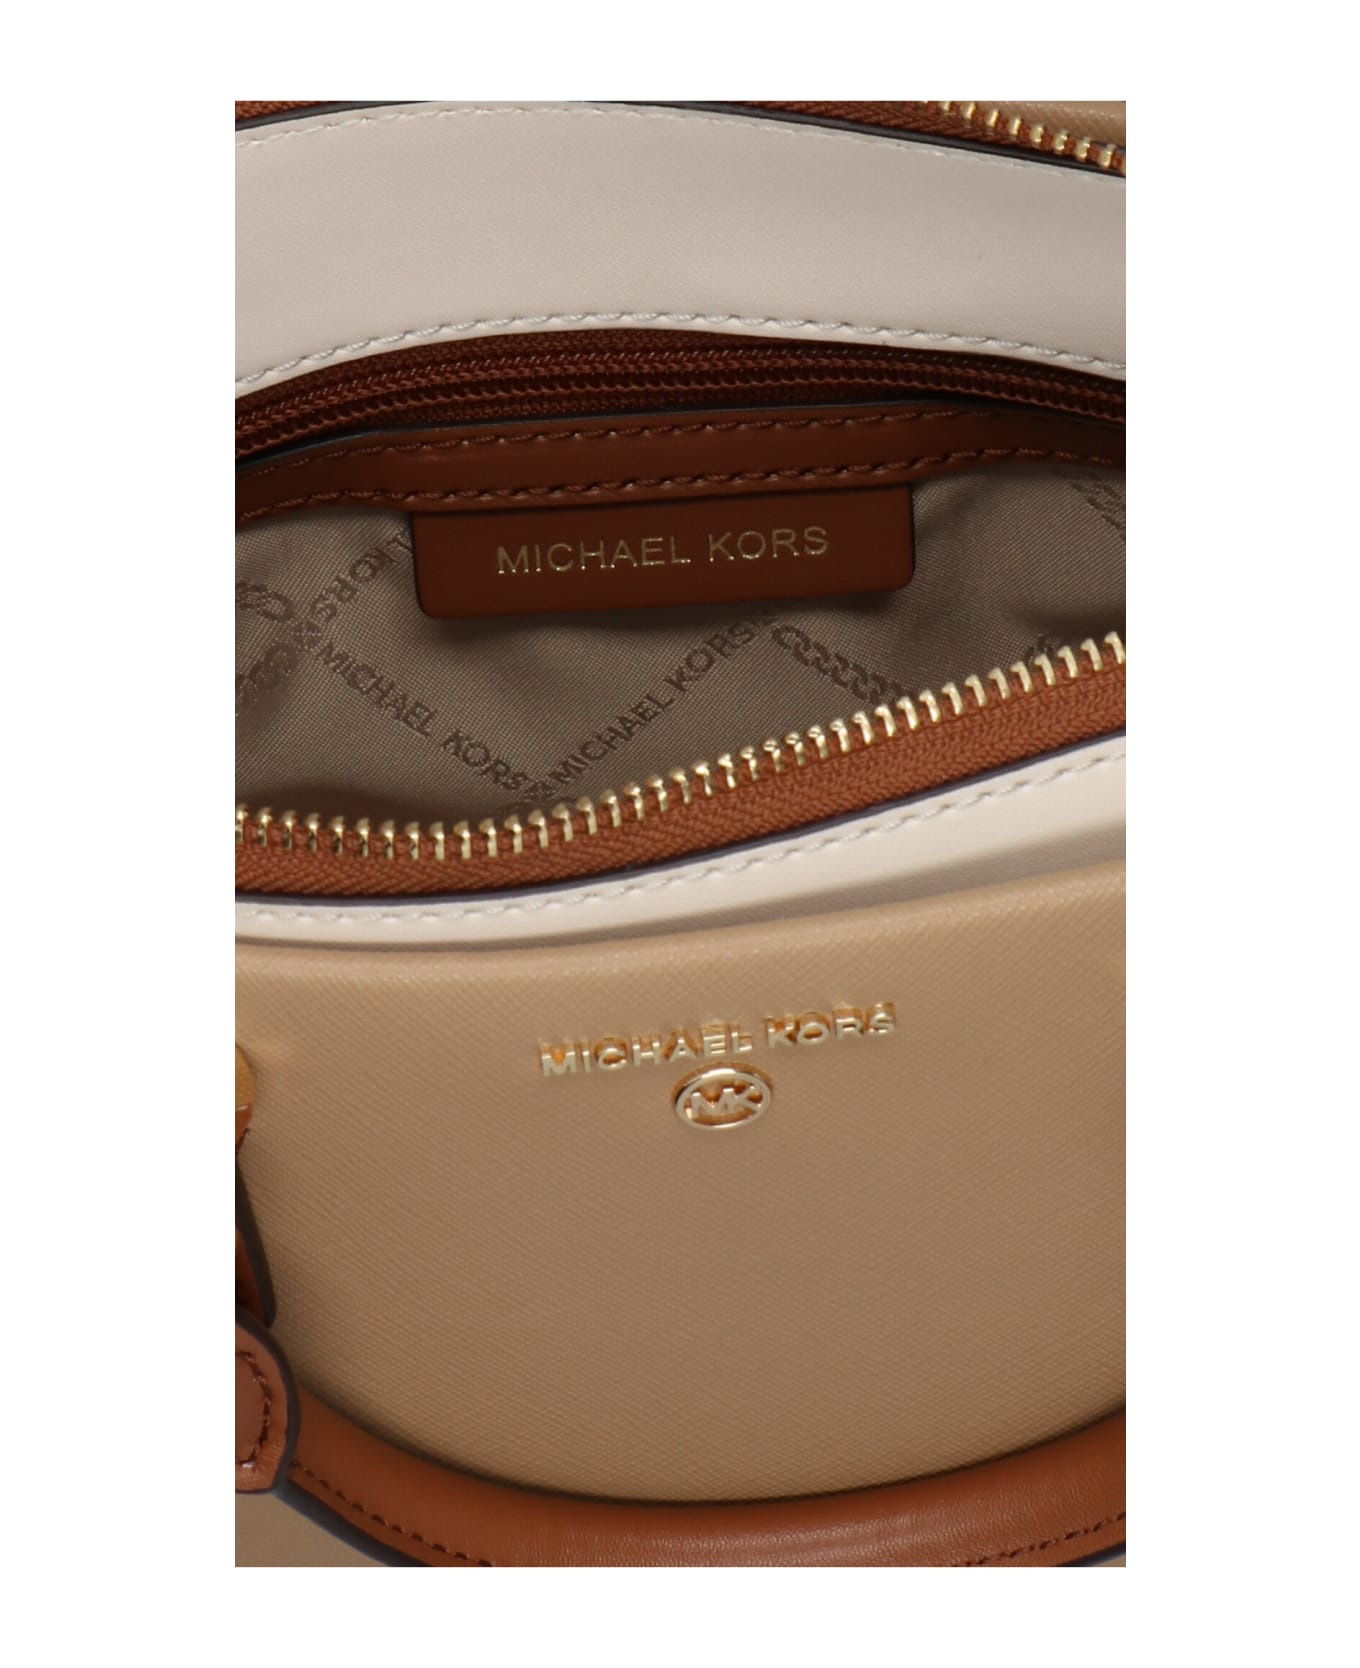 Michael Kors '18k Smooth Nappa' Handbag - Beige